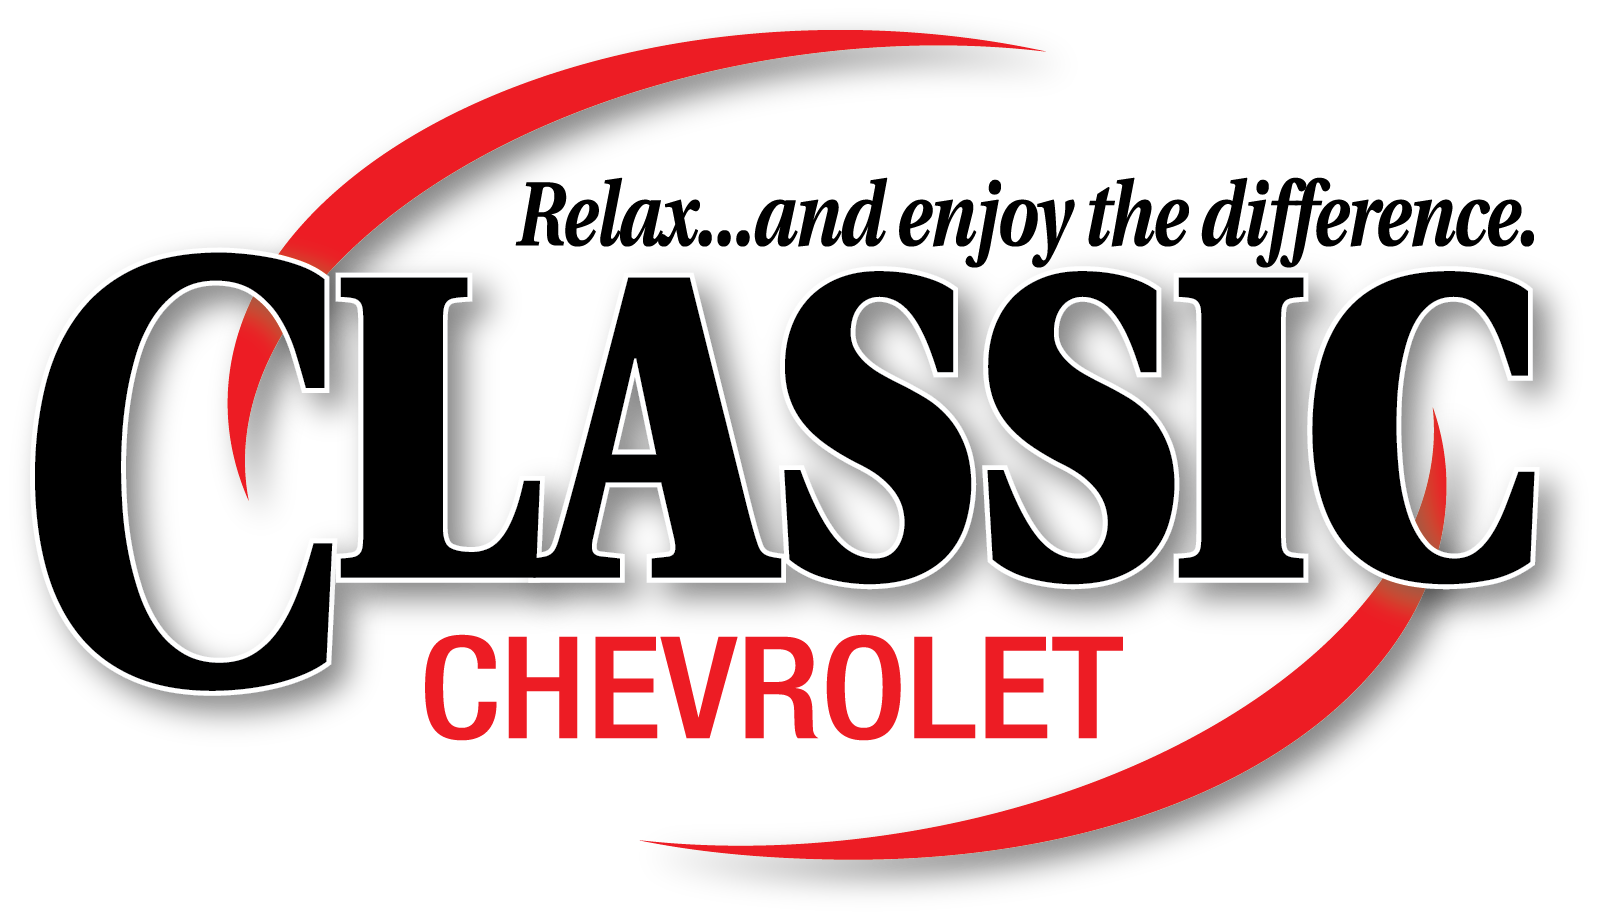 Classic Chevrolet Logo